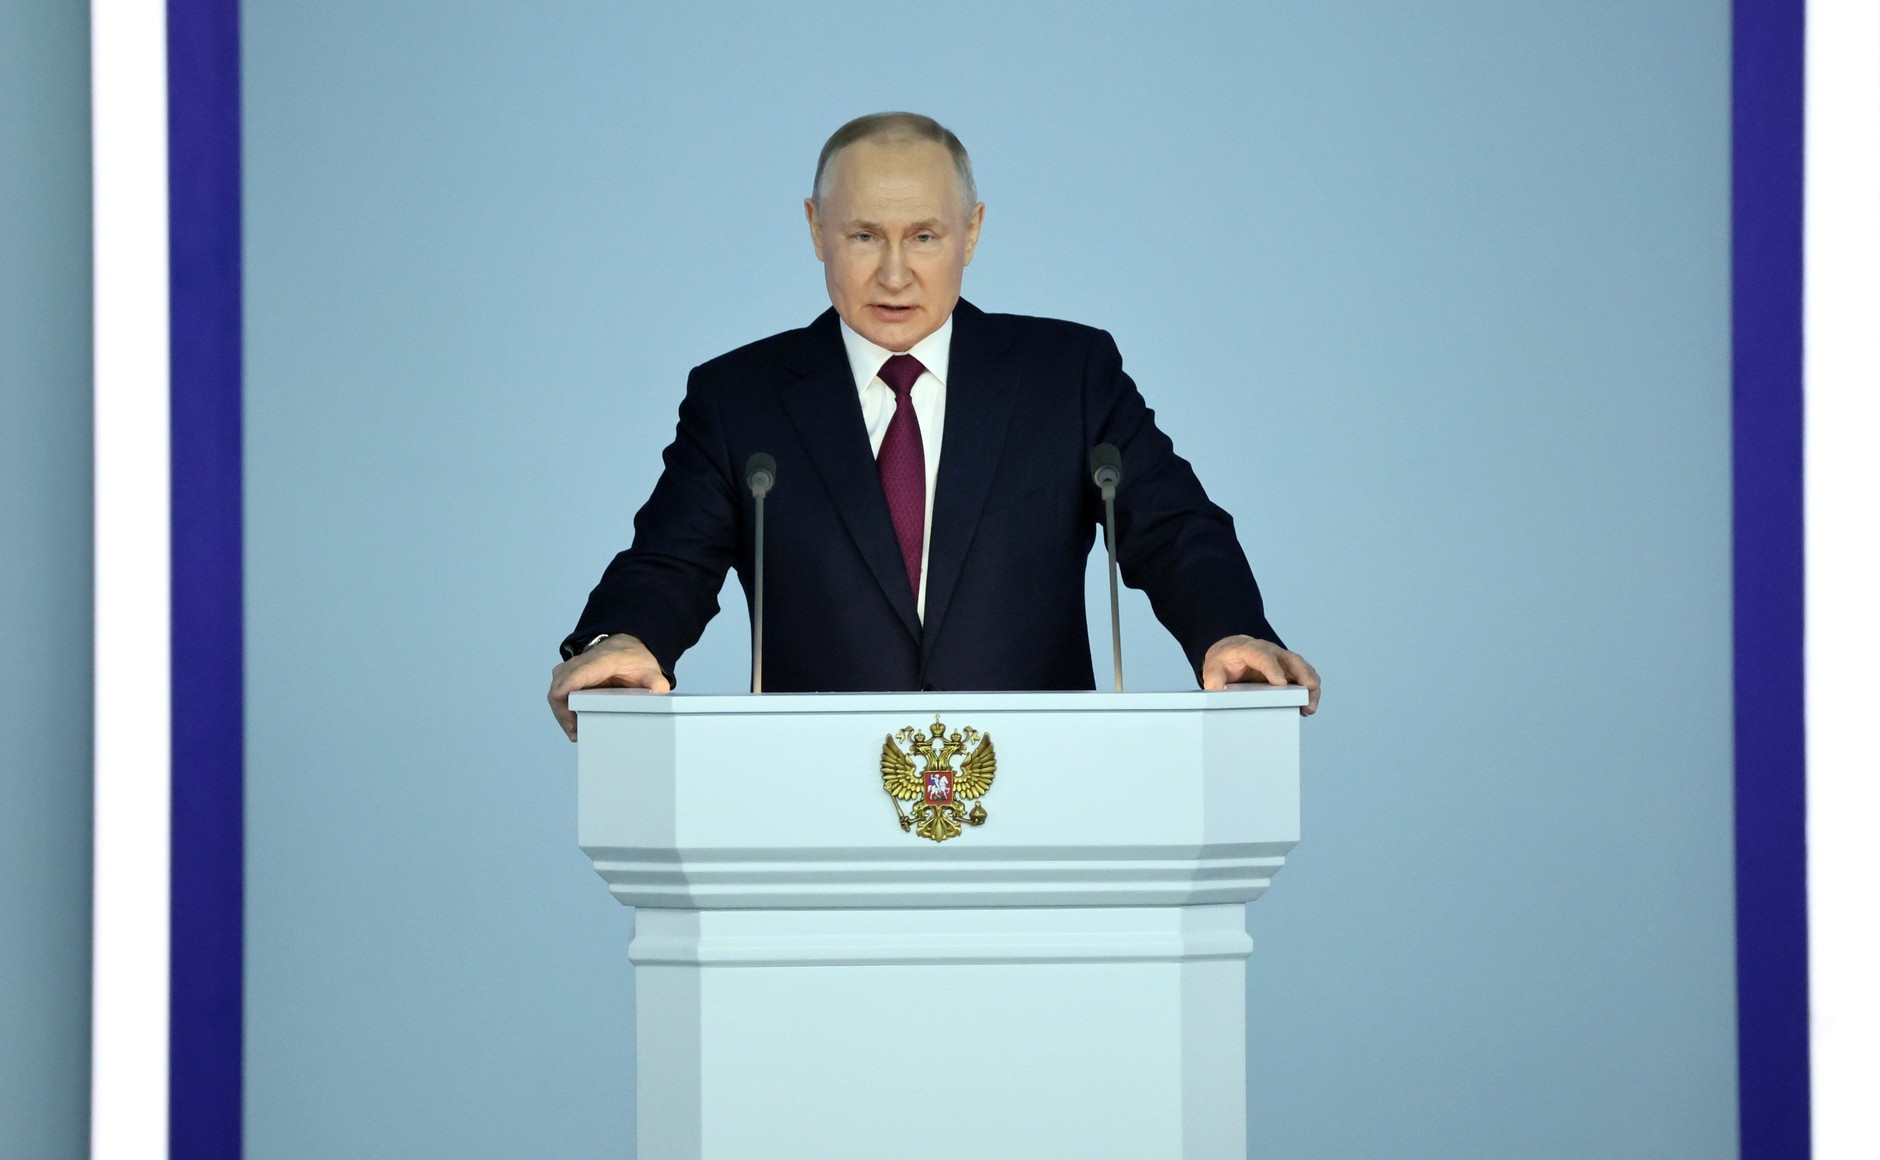 PULASKI COMMENTARY: Putin’s Speech to the Russian Parliament (Sebastian Czub)